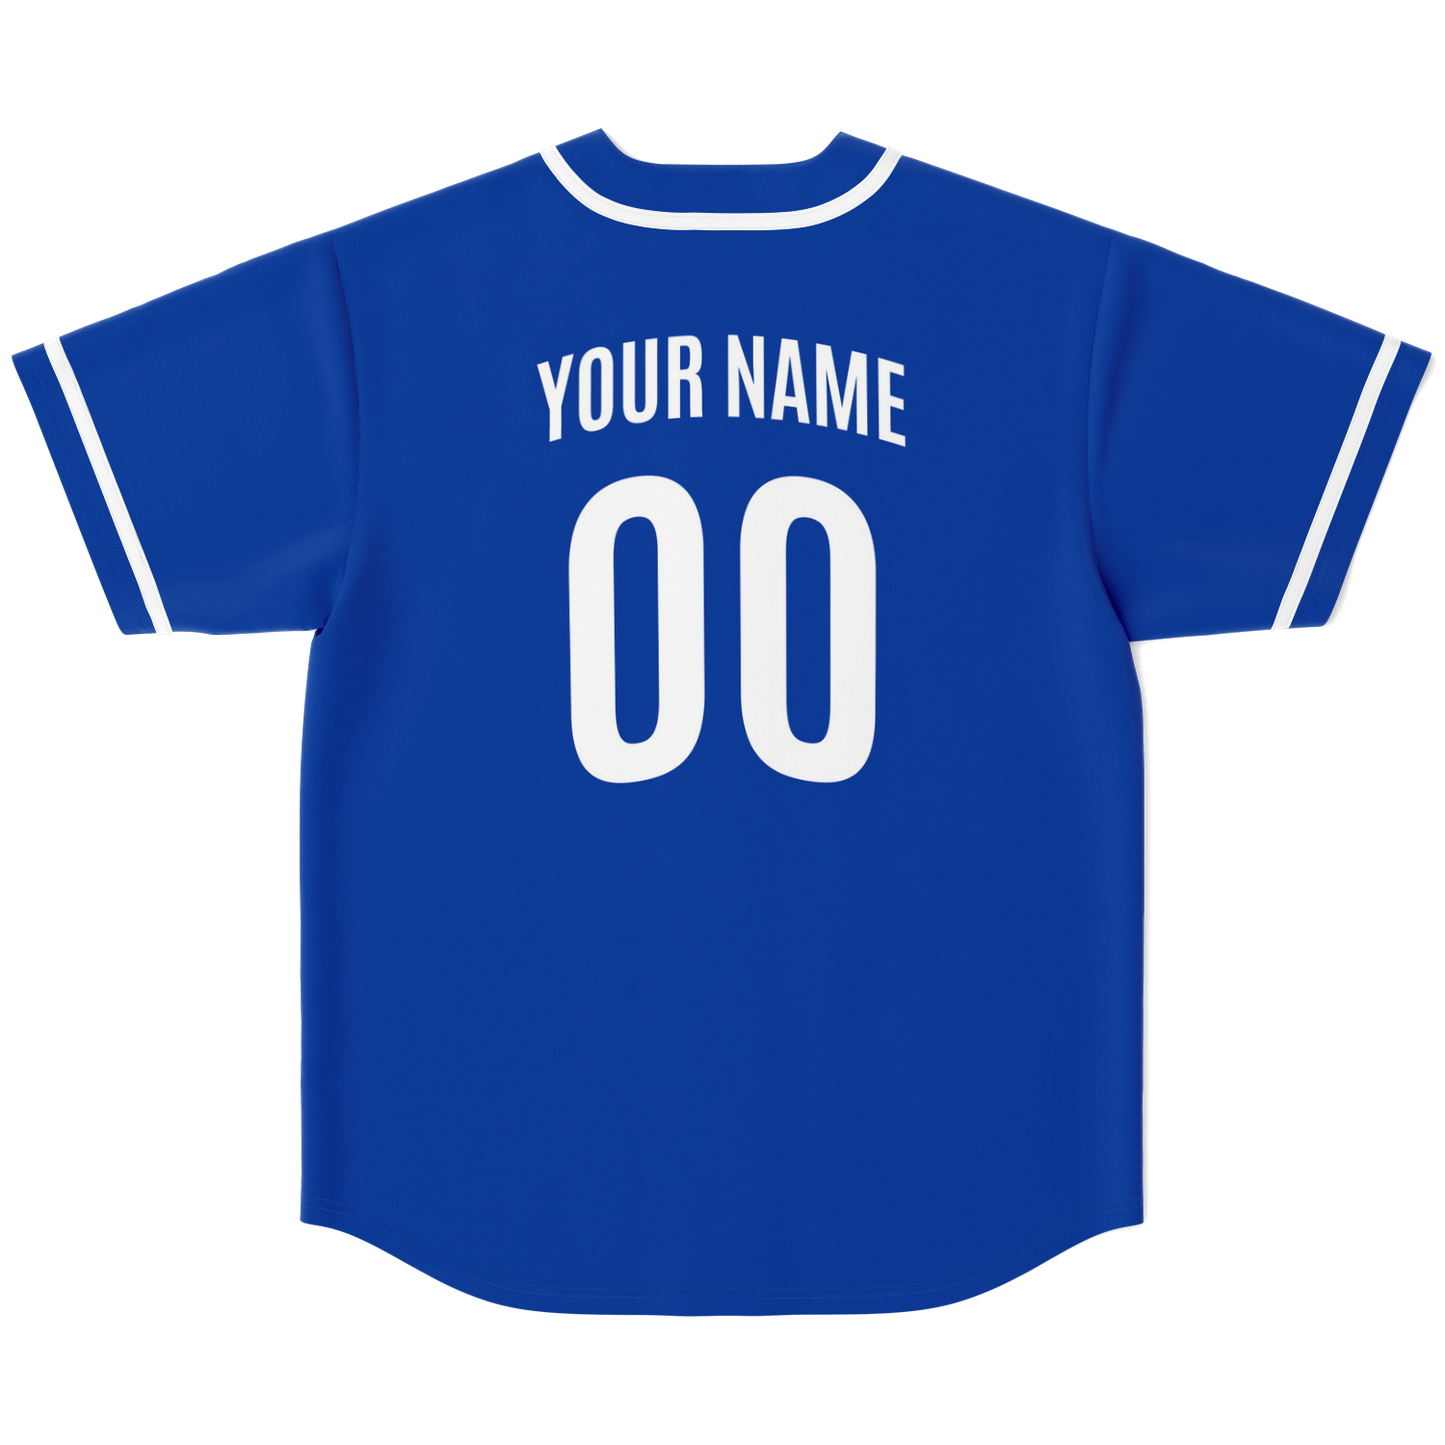 Italy Baseball Jersey - Custom Name + Number